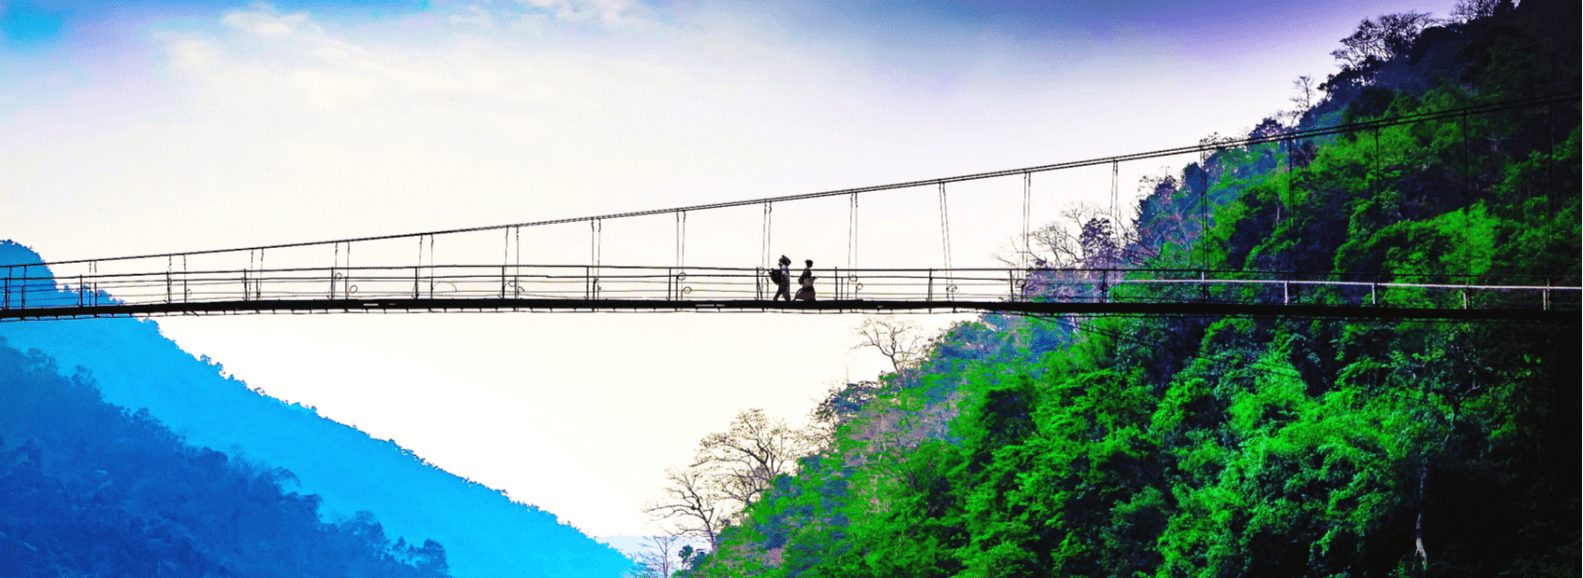 2 people walking on a bridge in Shillong